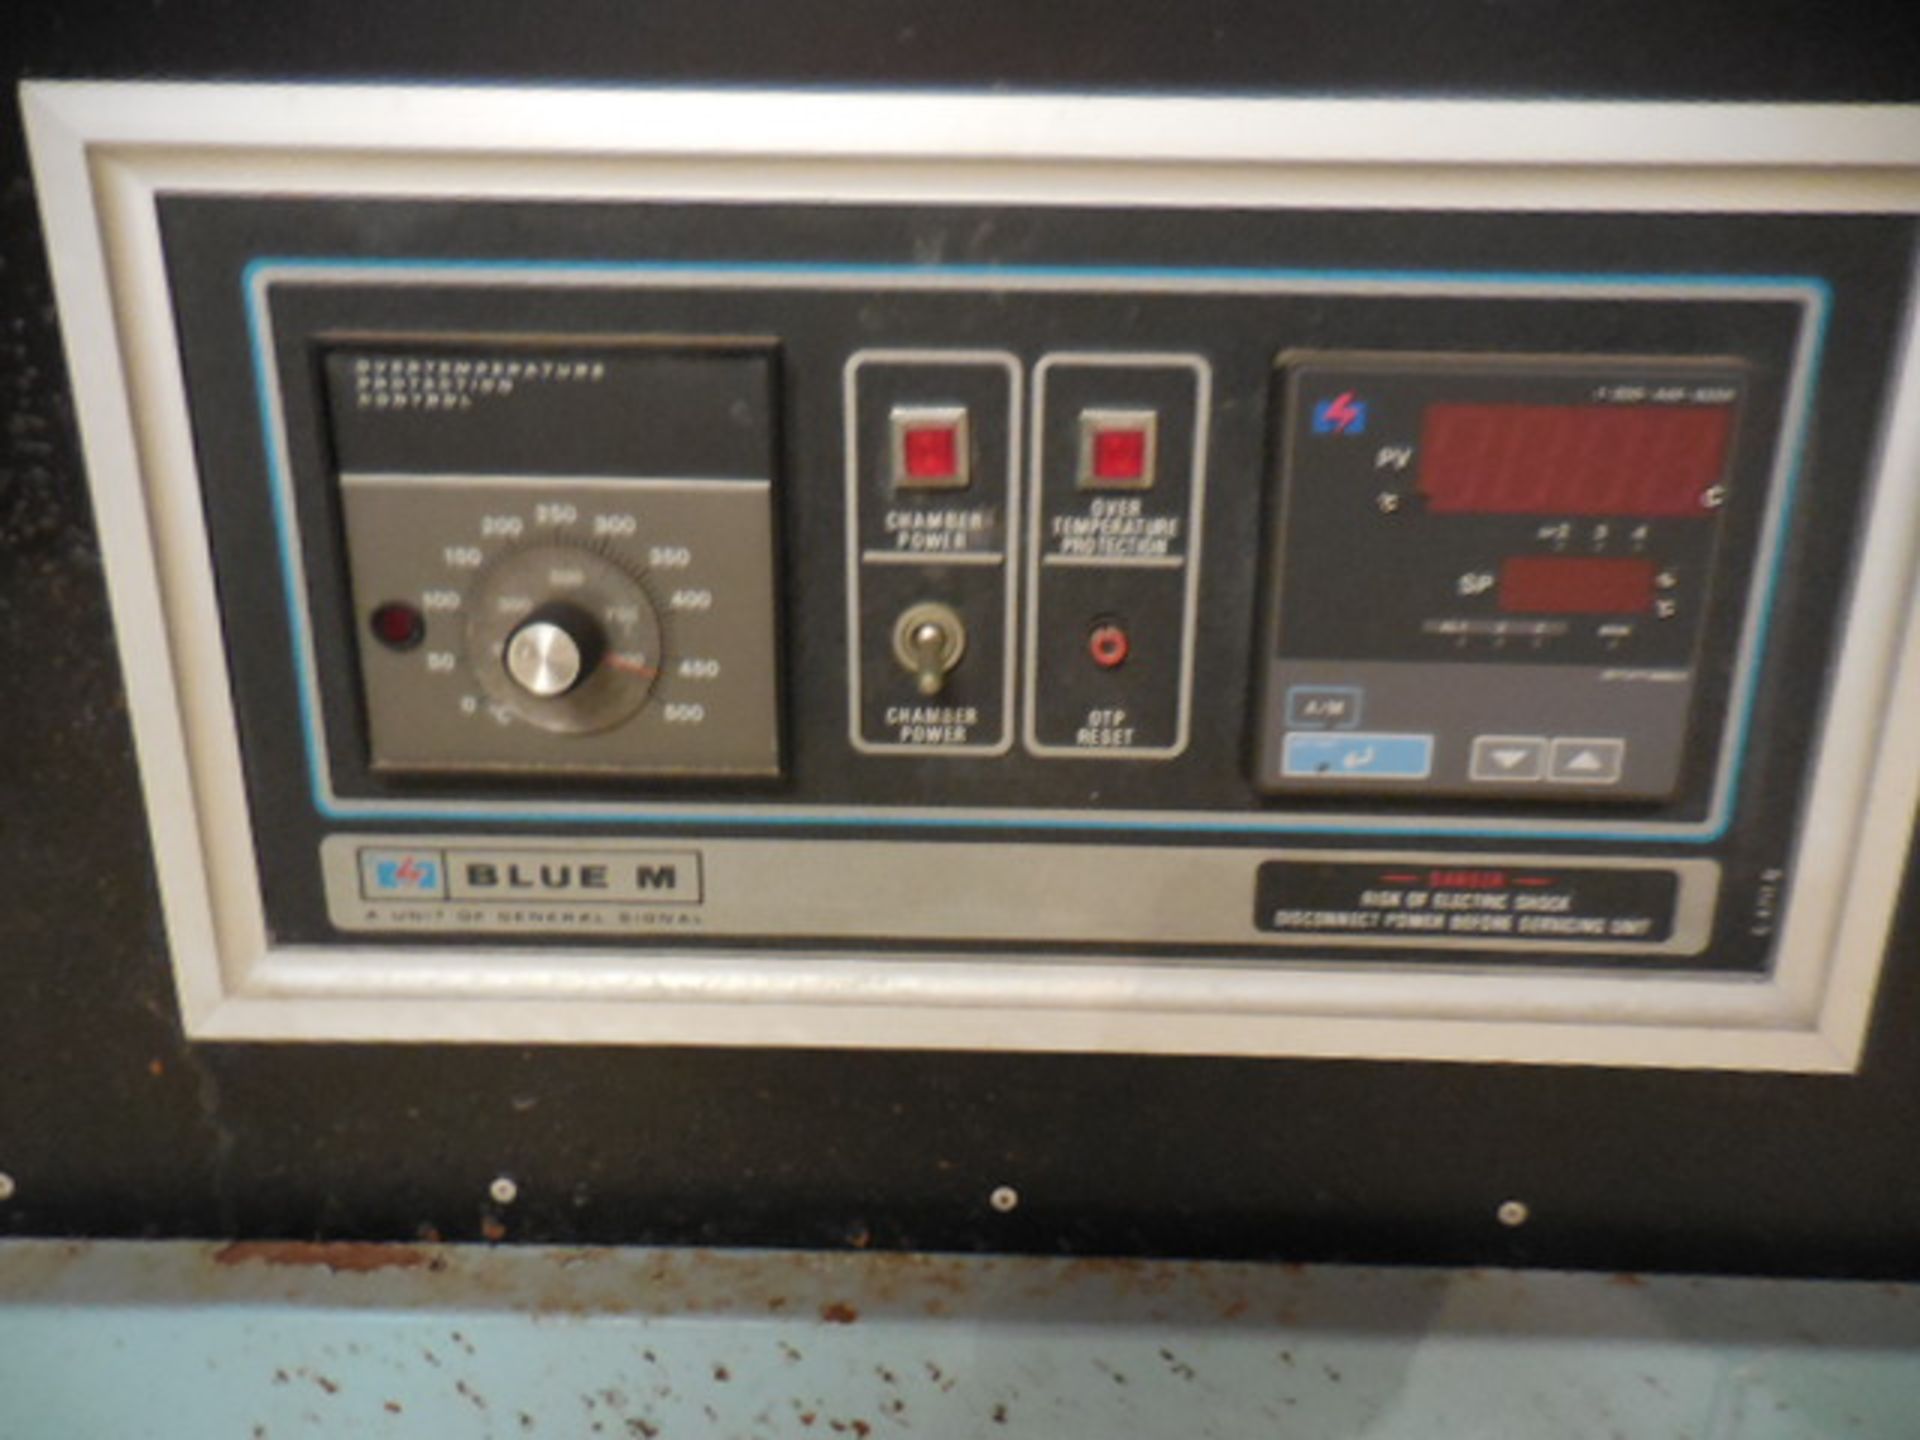 Blue M Oven, Model #DC-1406F, SN DC-5778, Temp Range 343C/650F - Image 2 of 6